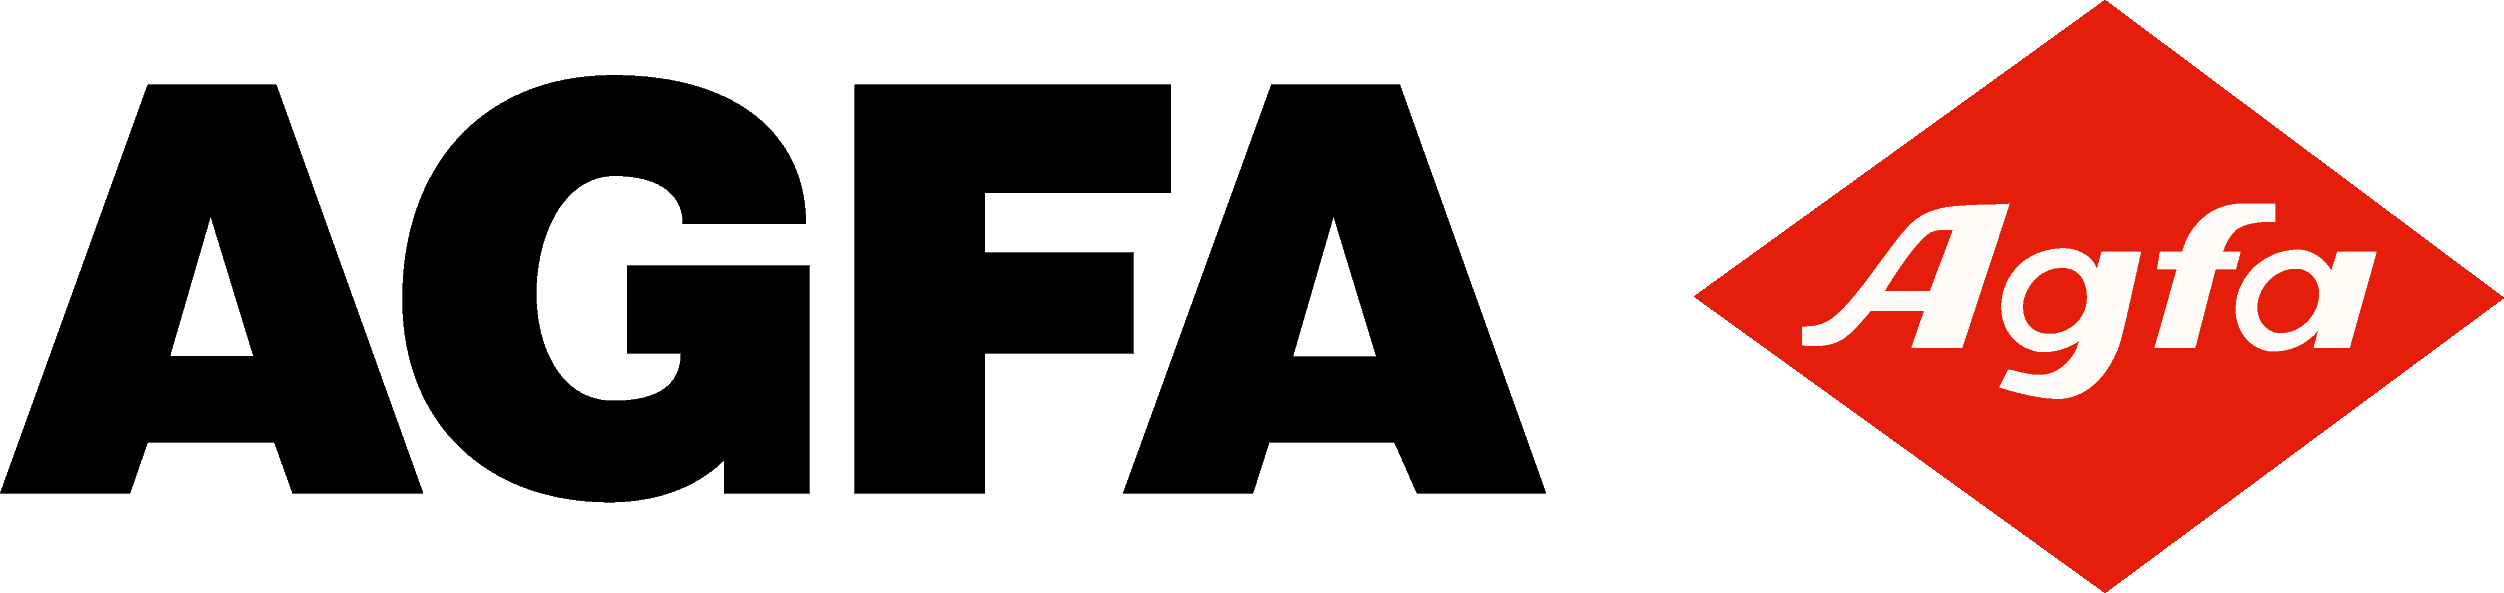 Agfa logo color